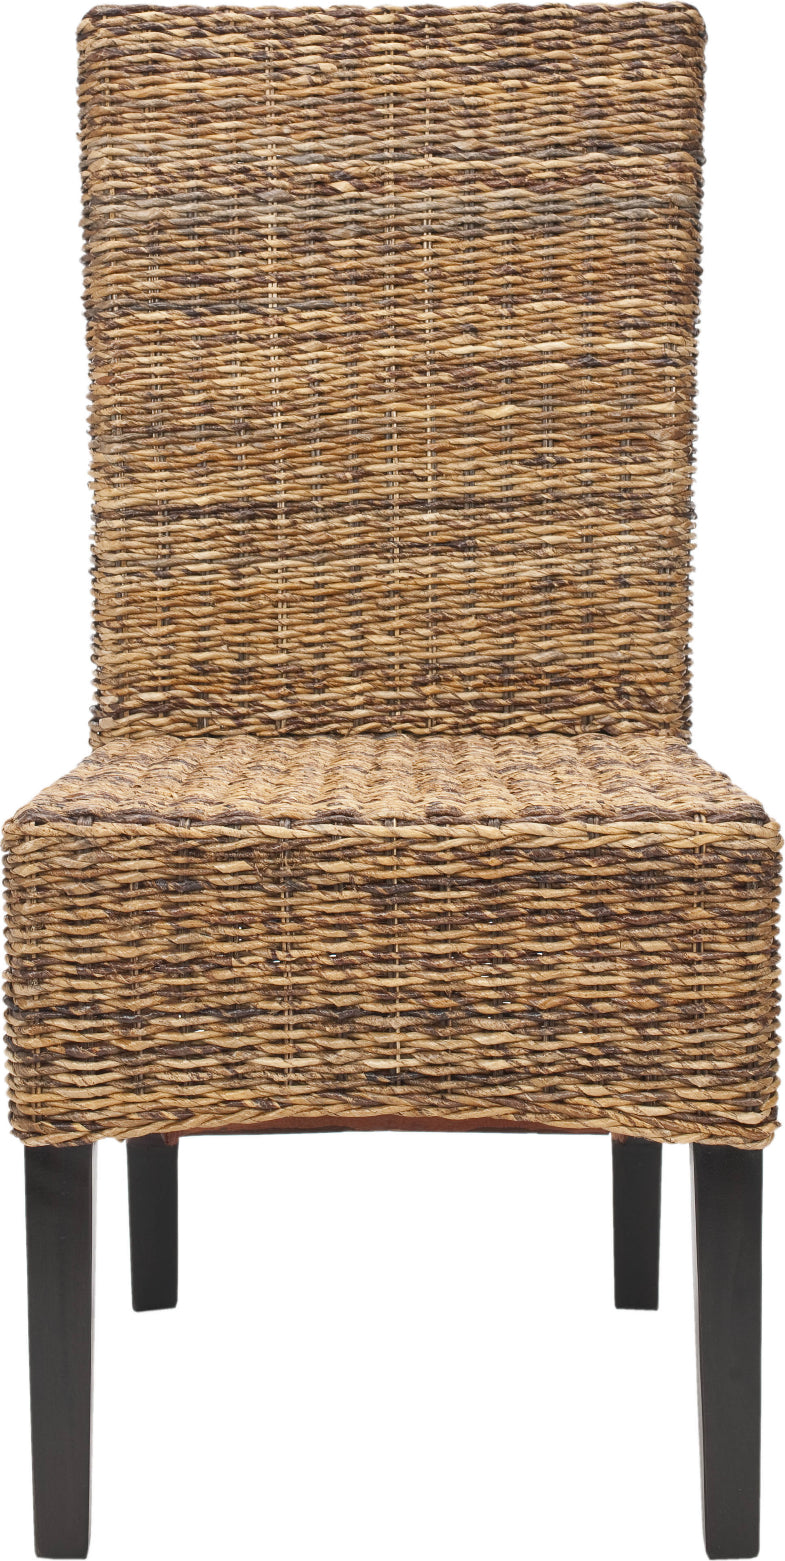 Safavieh Siesta 18''H Wicker Side Chair (SET Of 2) Dark Brown and Colonial Furniture main image